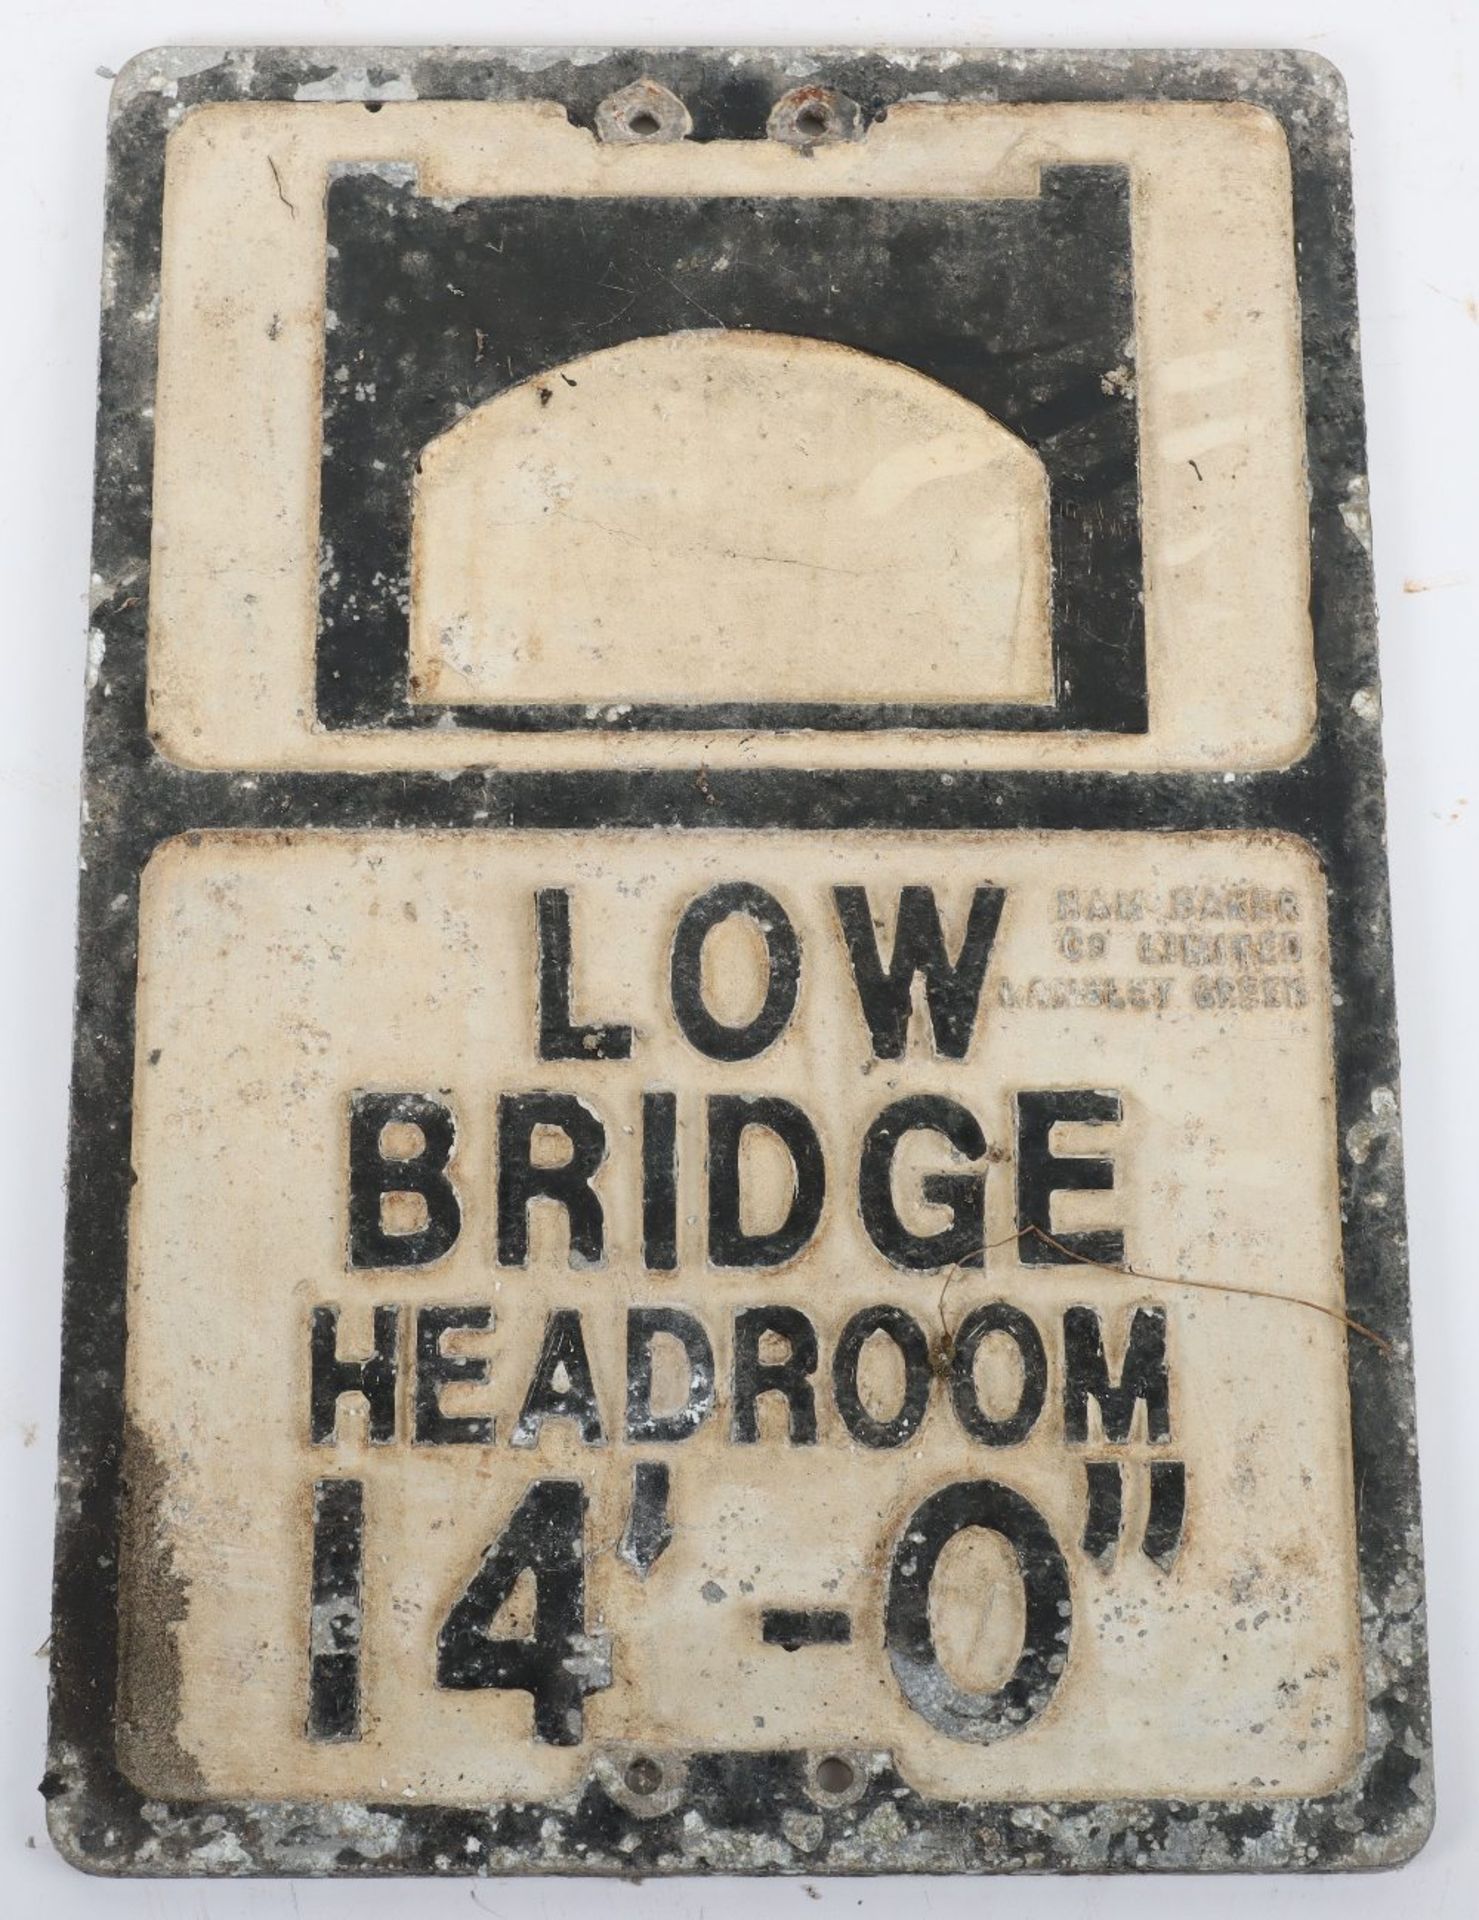 An aluminium Low Bridge Headroom 14’-0 sign